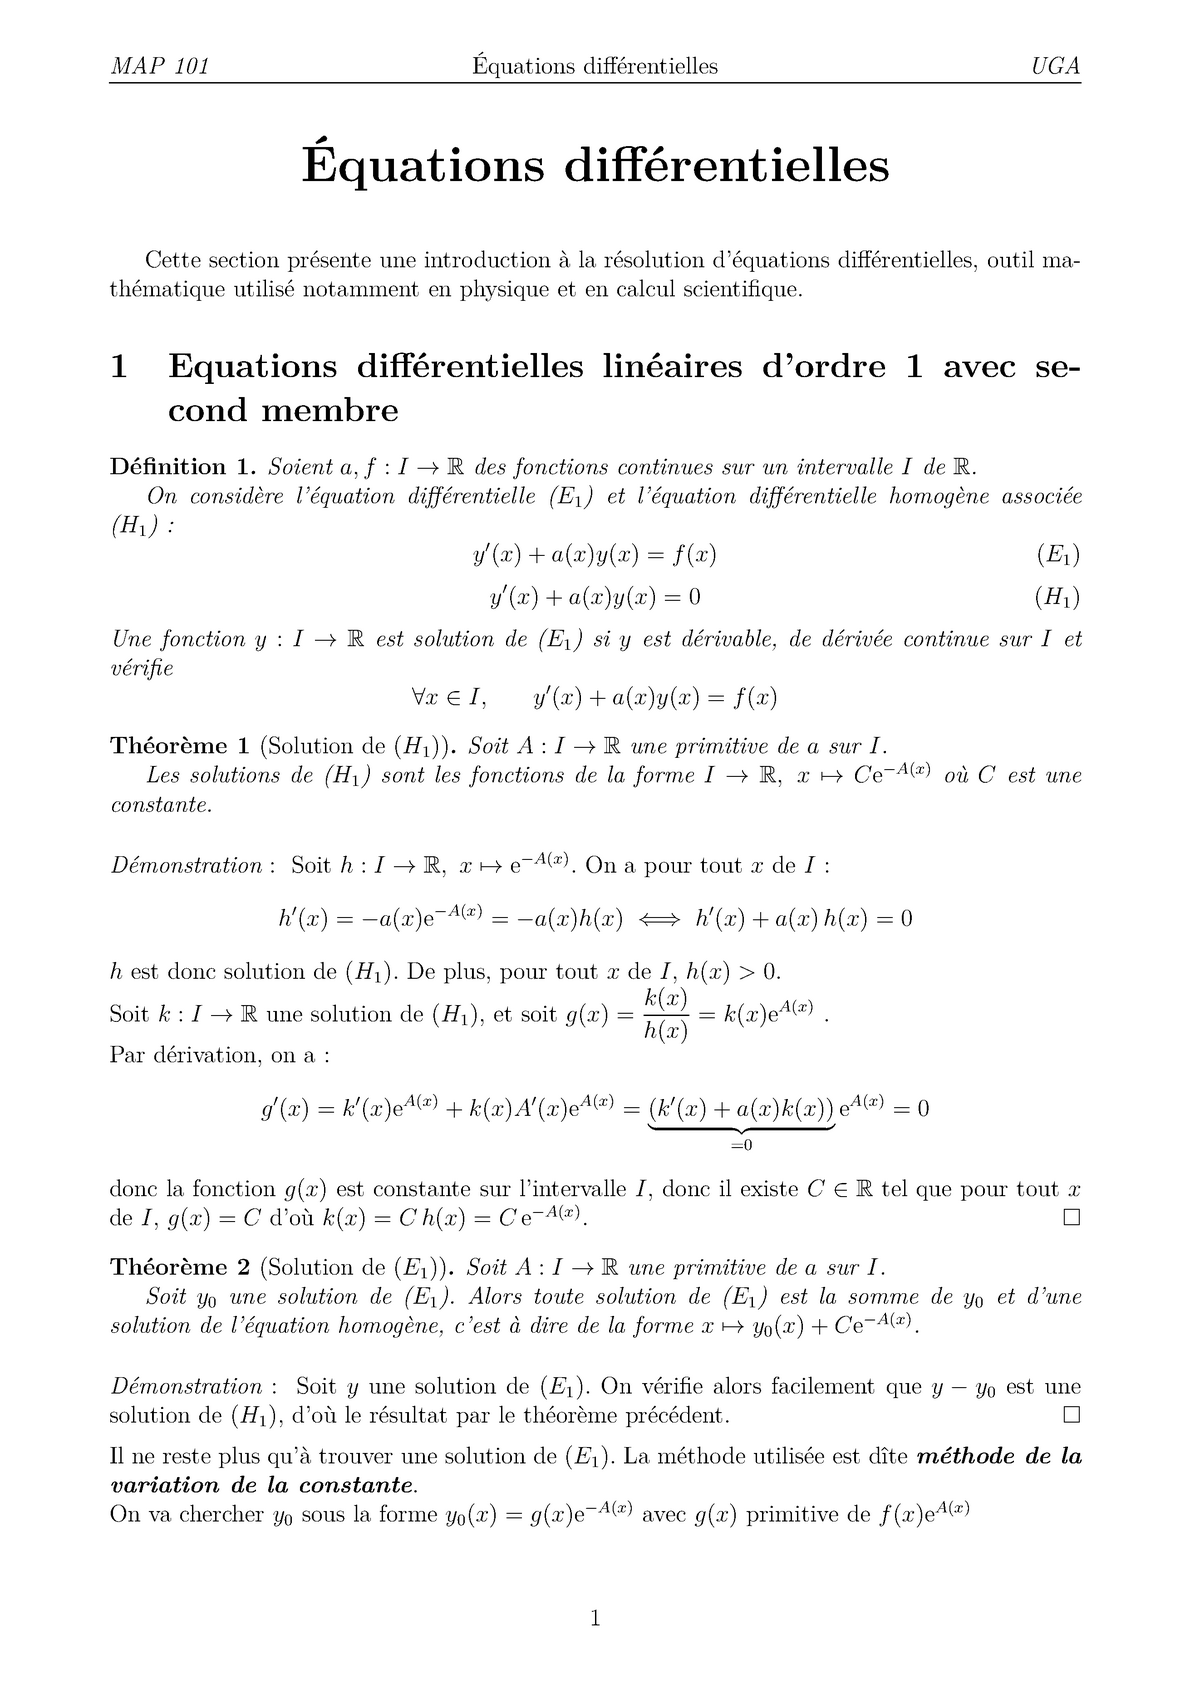 Cours Equa Diff Resume Analyse Calcul Integral Et Equations Differentielles Studocu